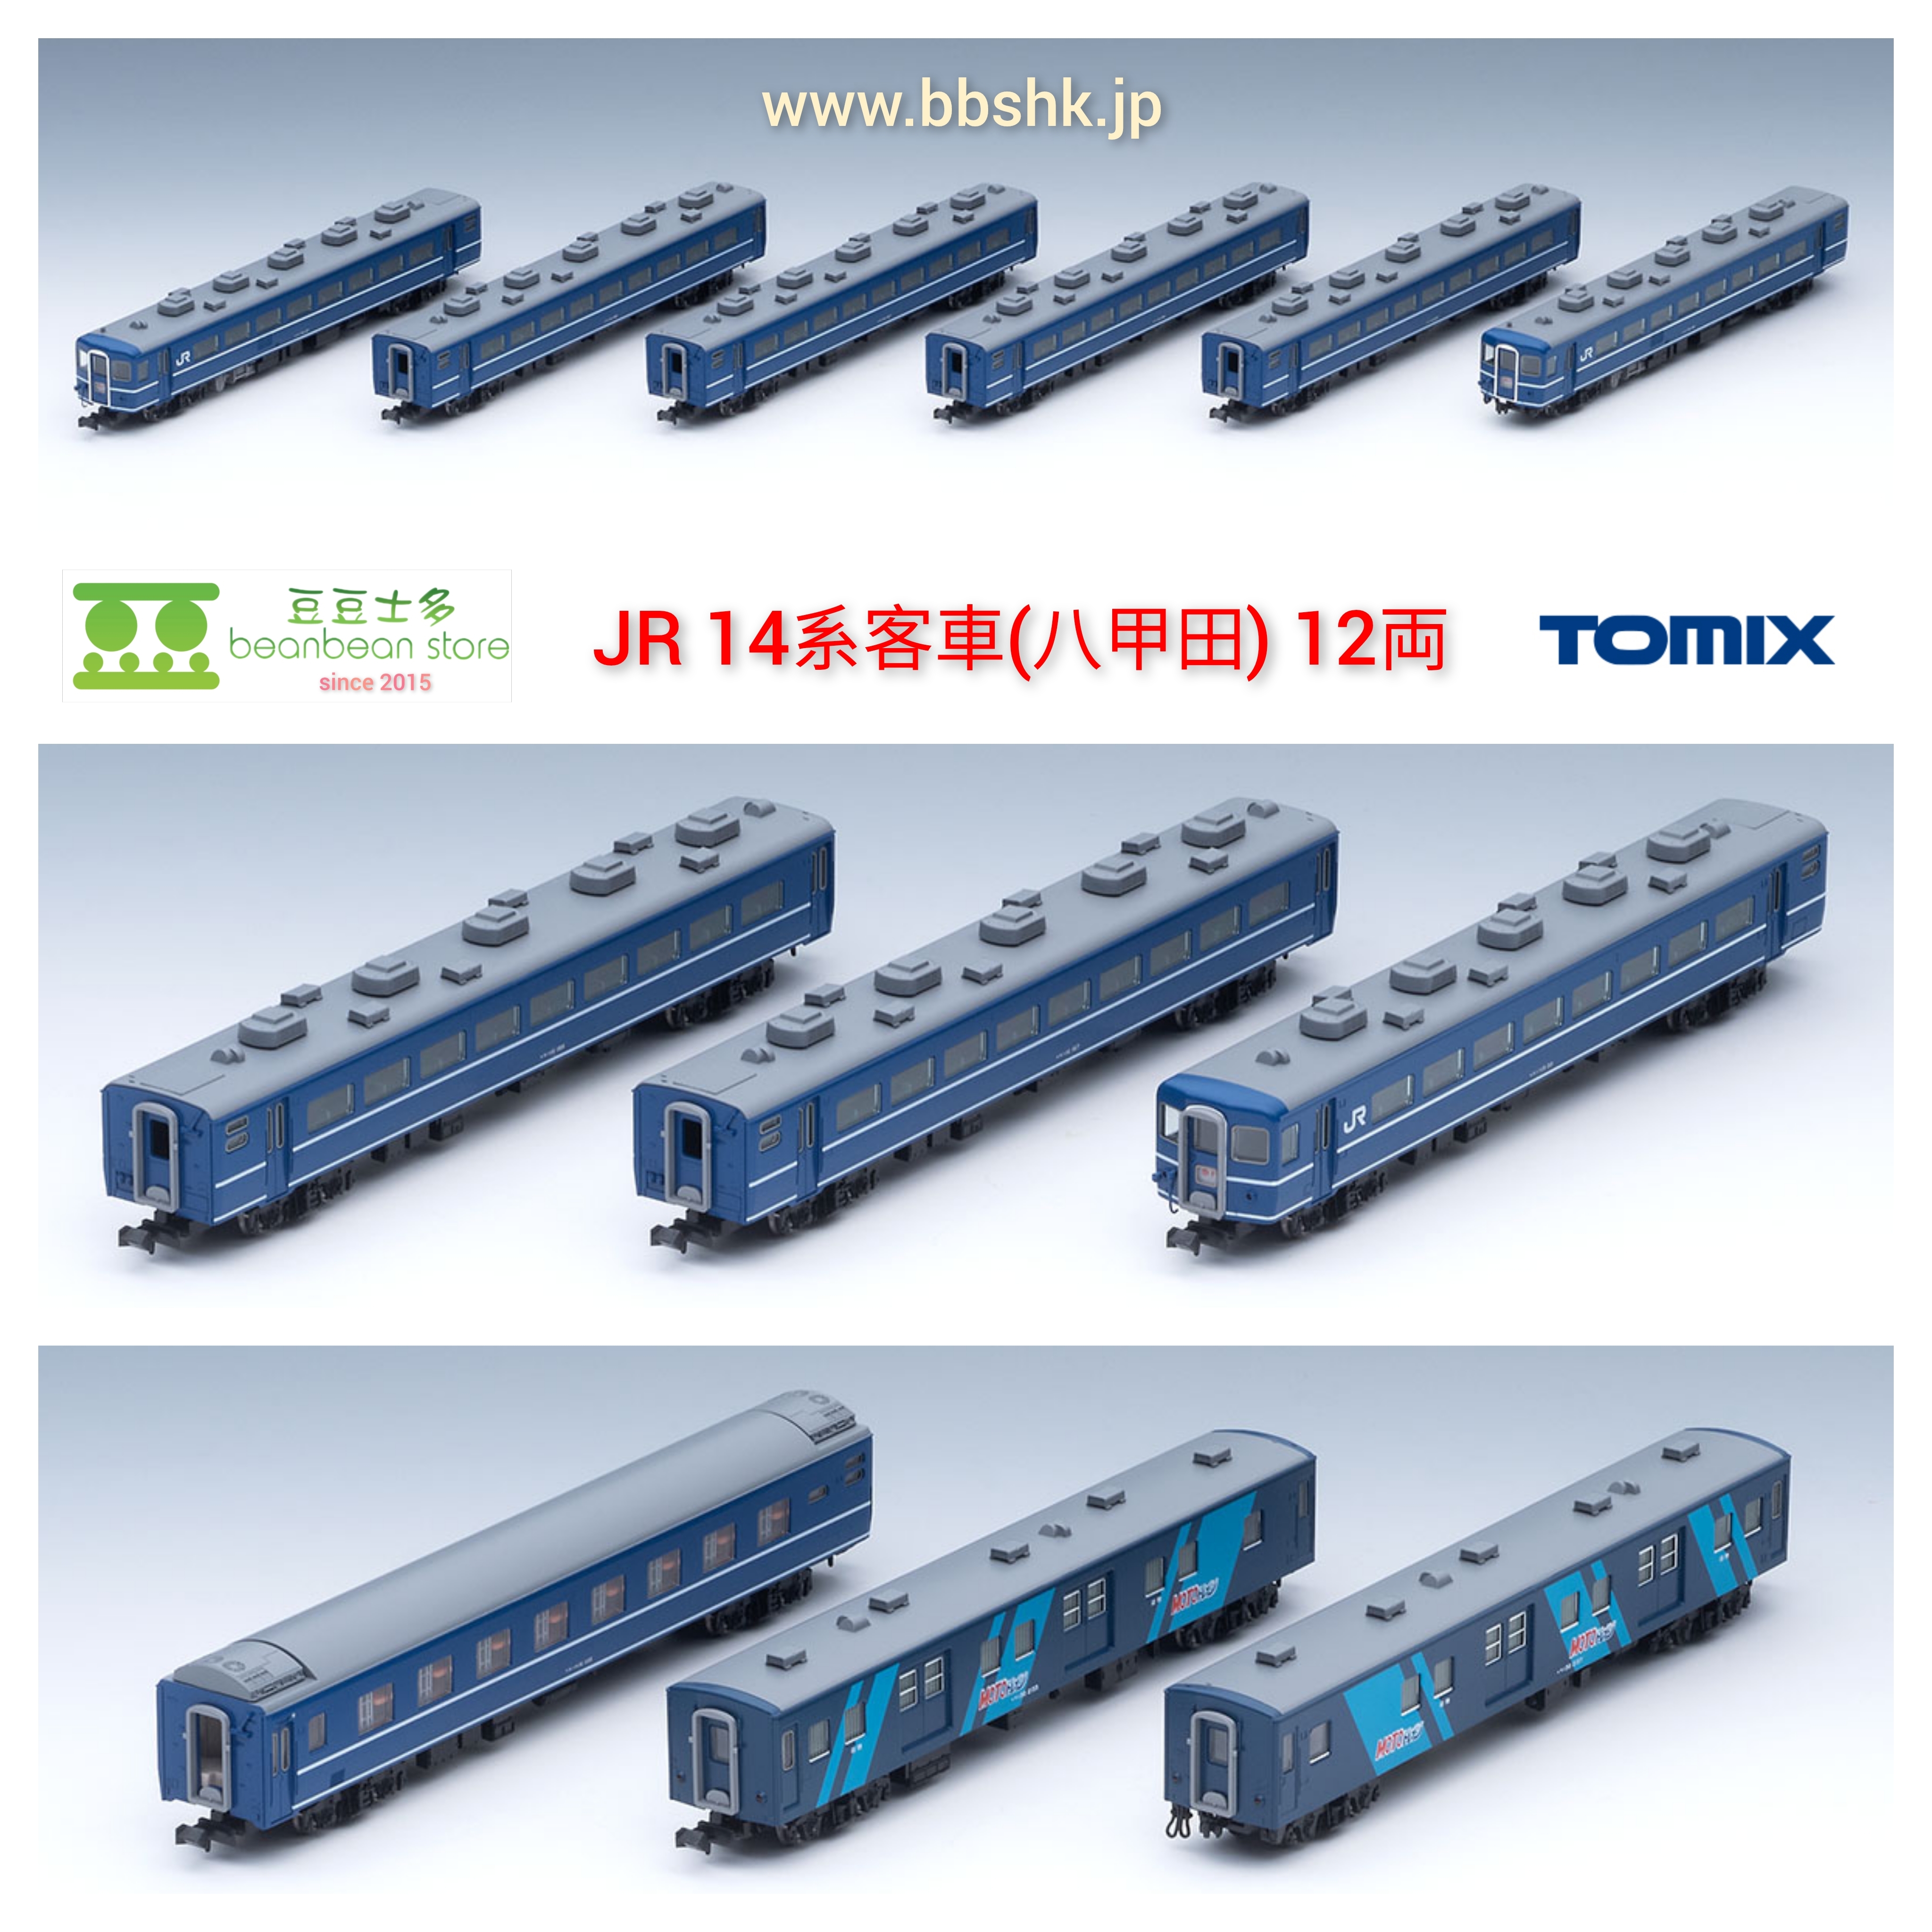 TOMIX 98741, 98742 & 98743 JR 14系客車(八甲田) 12両